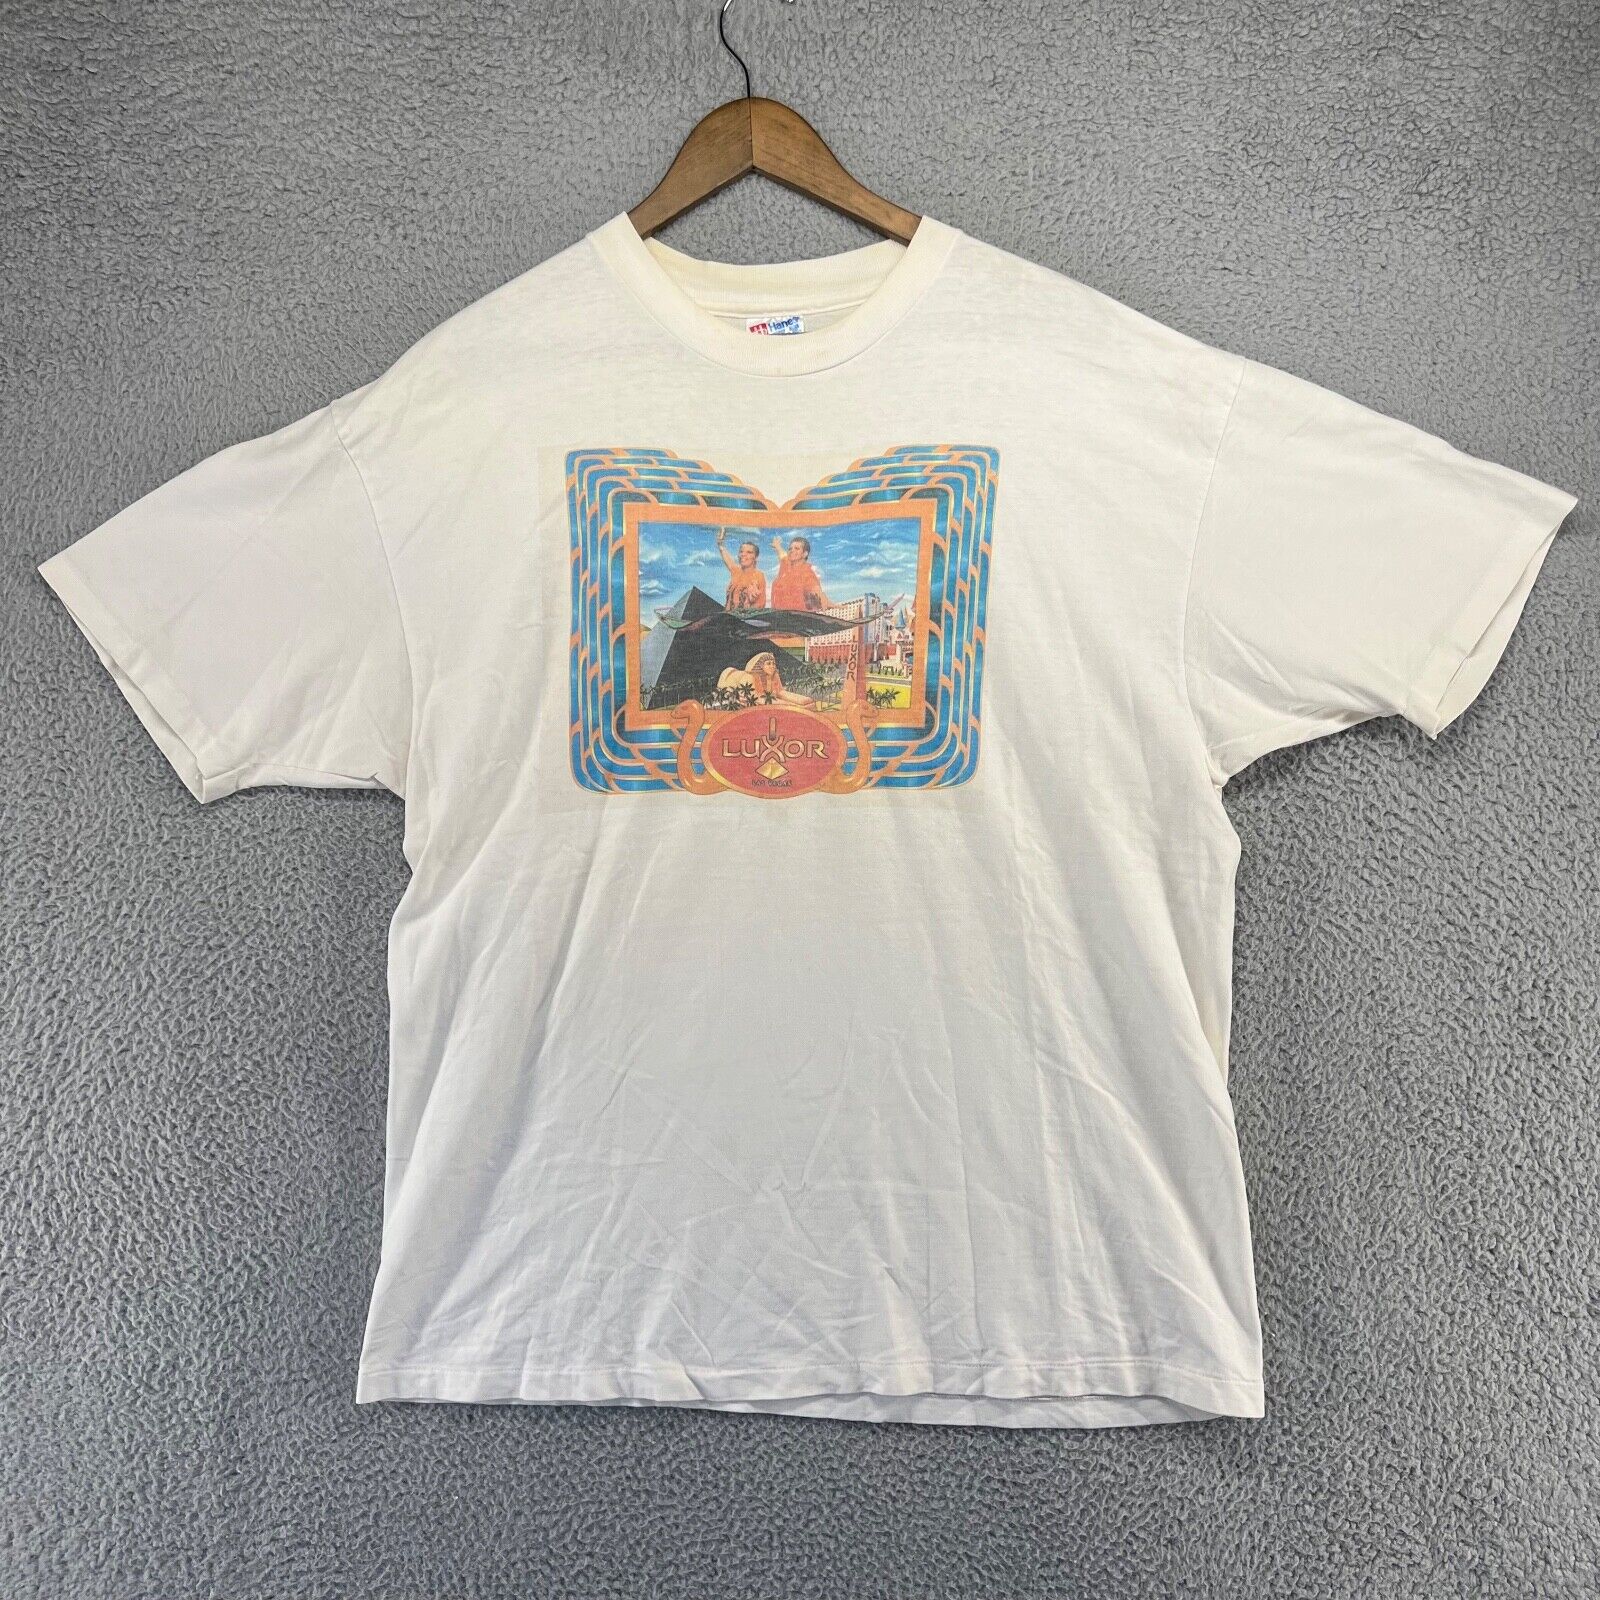 Vintage Luxor Las Vegas Shirt Men\'s Extra large White Graphic Single Stitch 90s